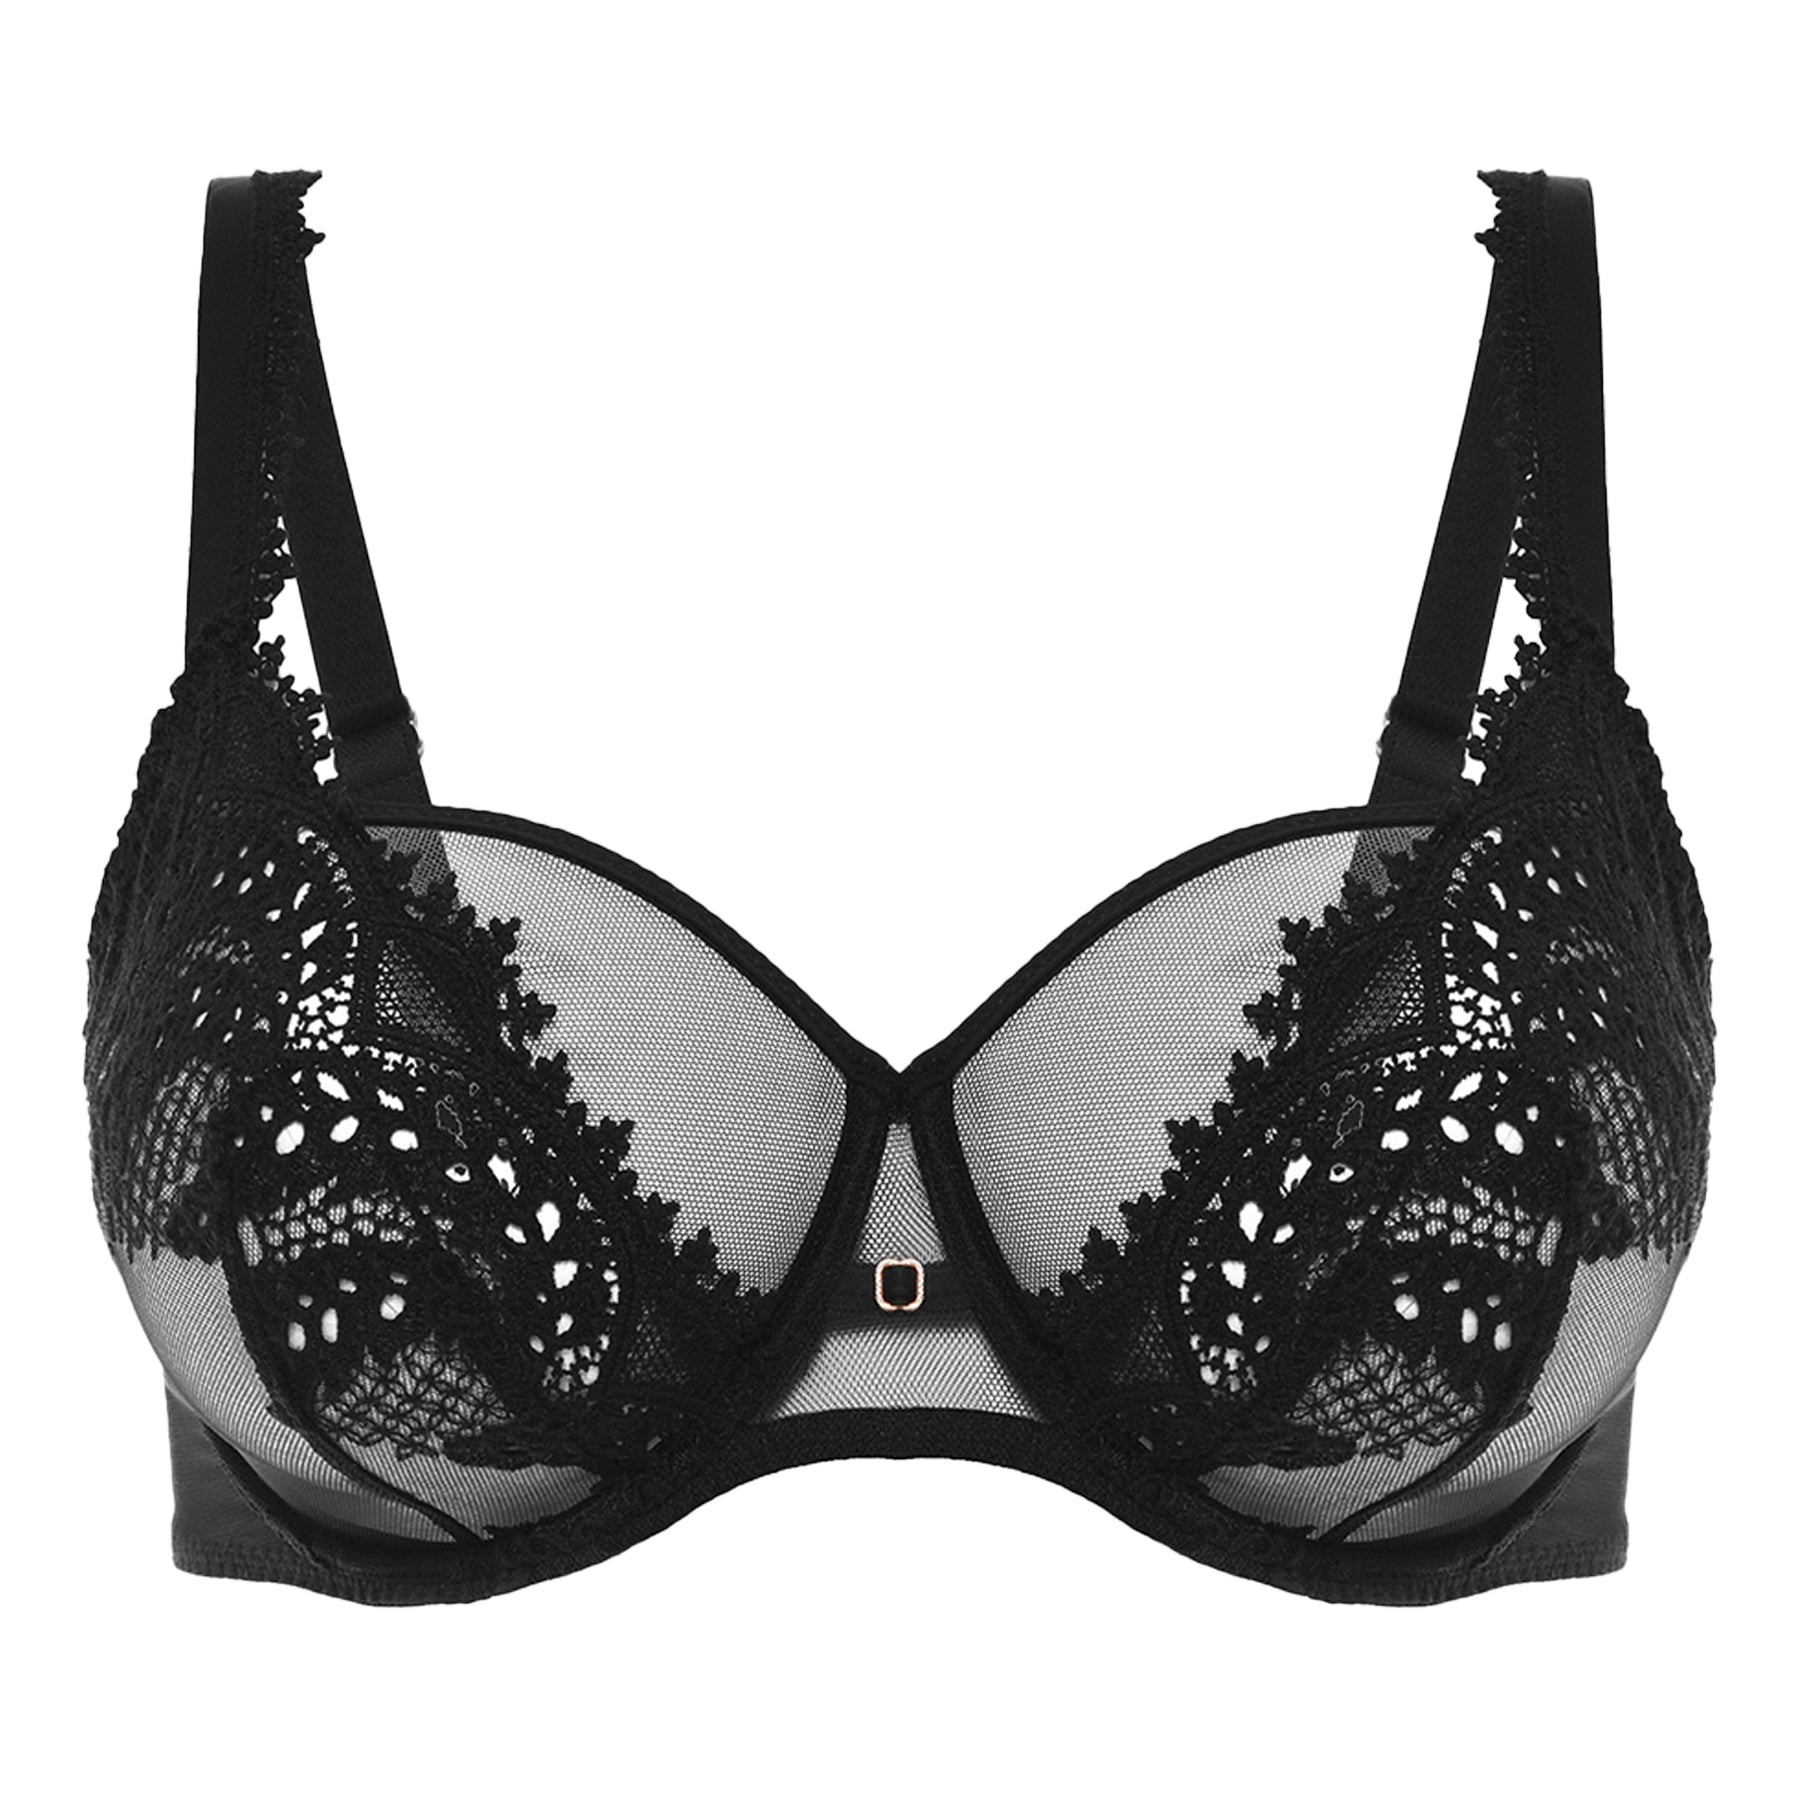 Buy online Black Embellished Plunge Bra from lingerie for Women by